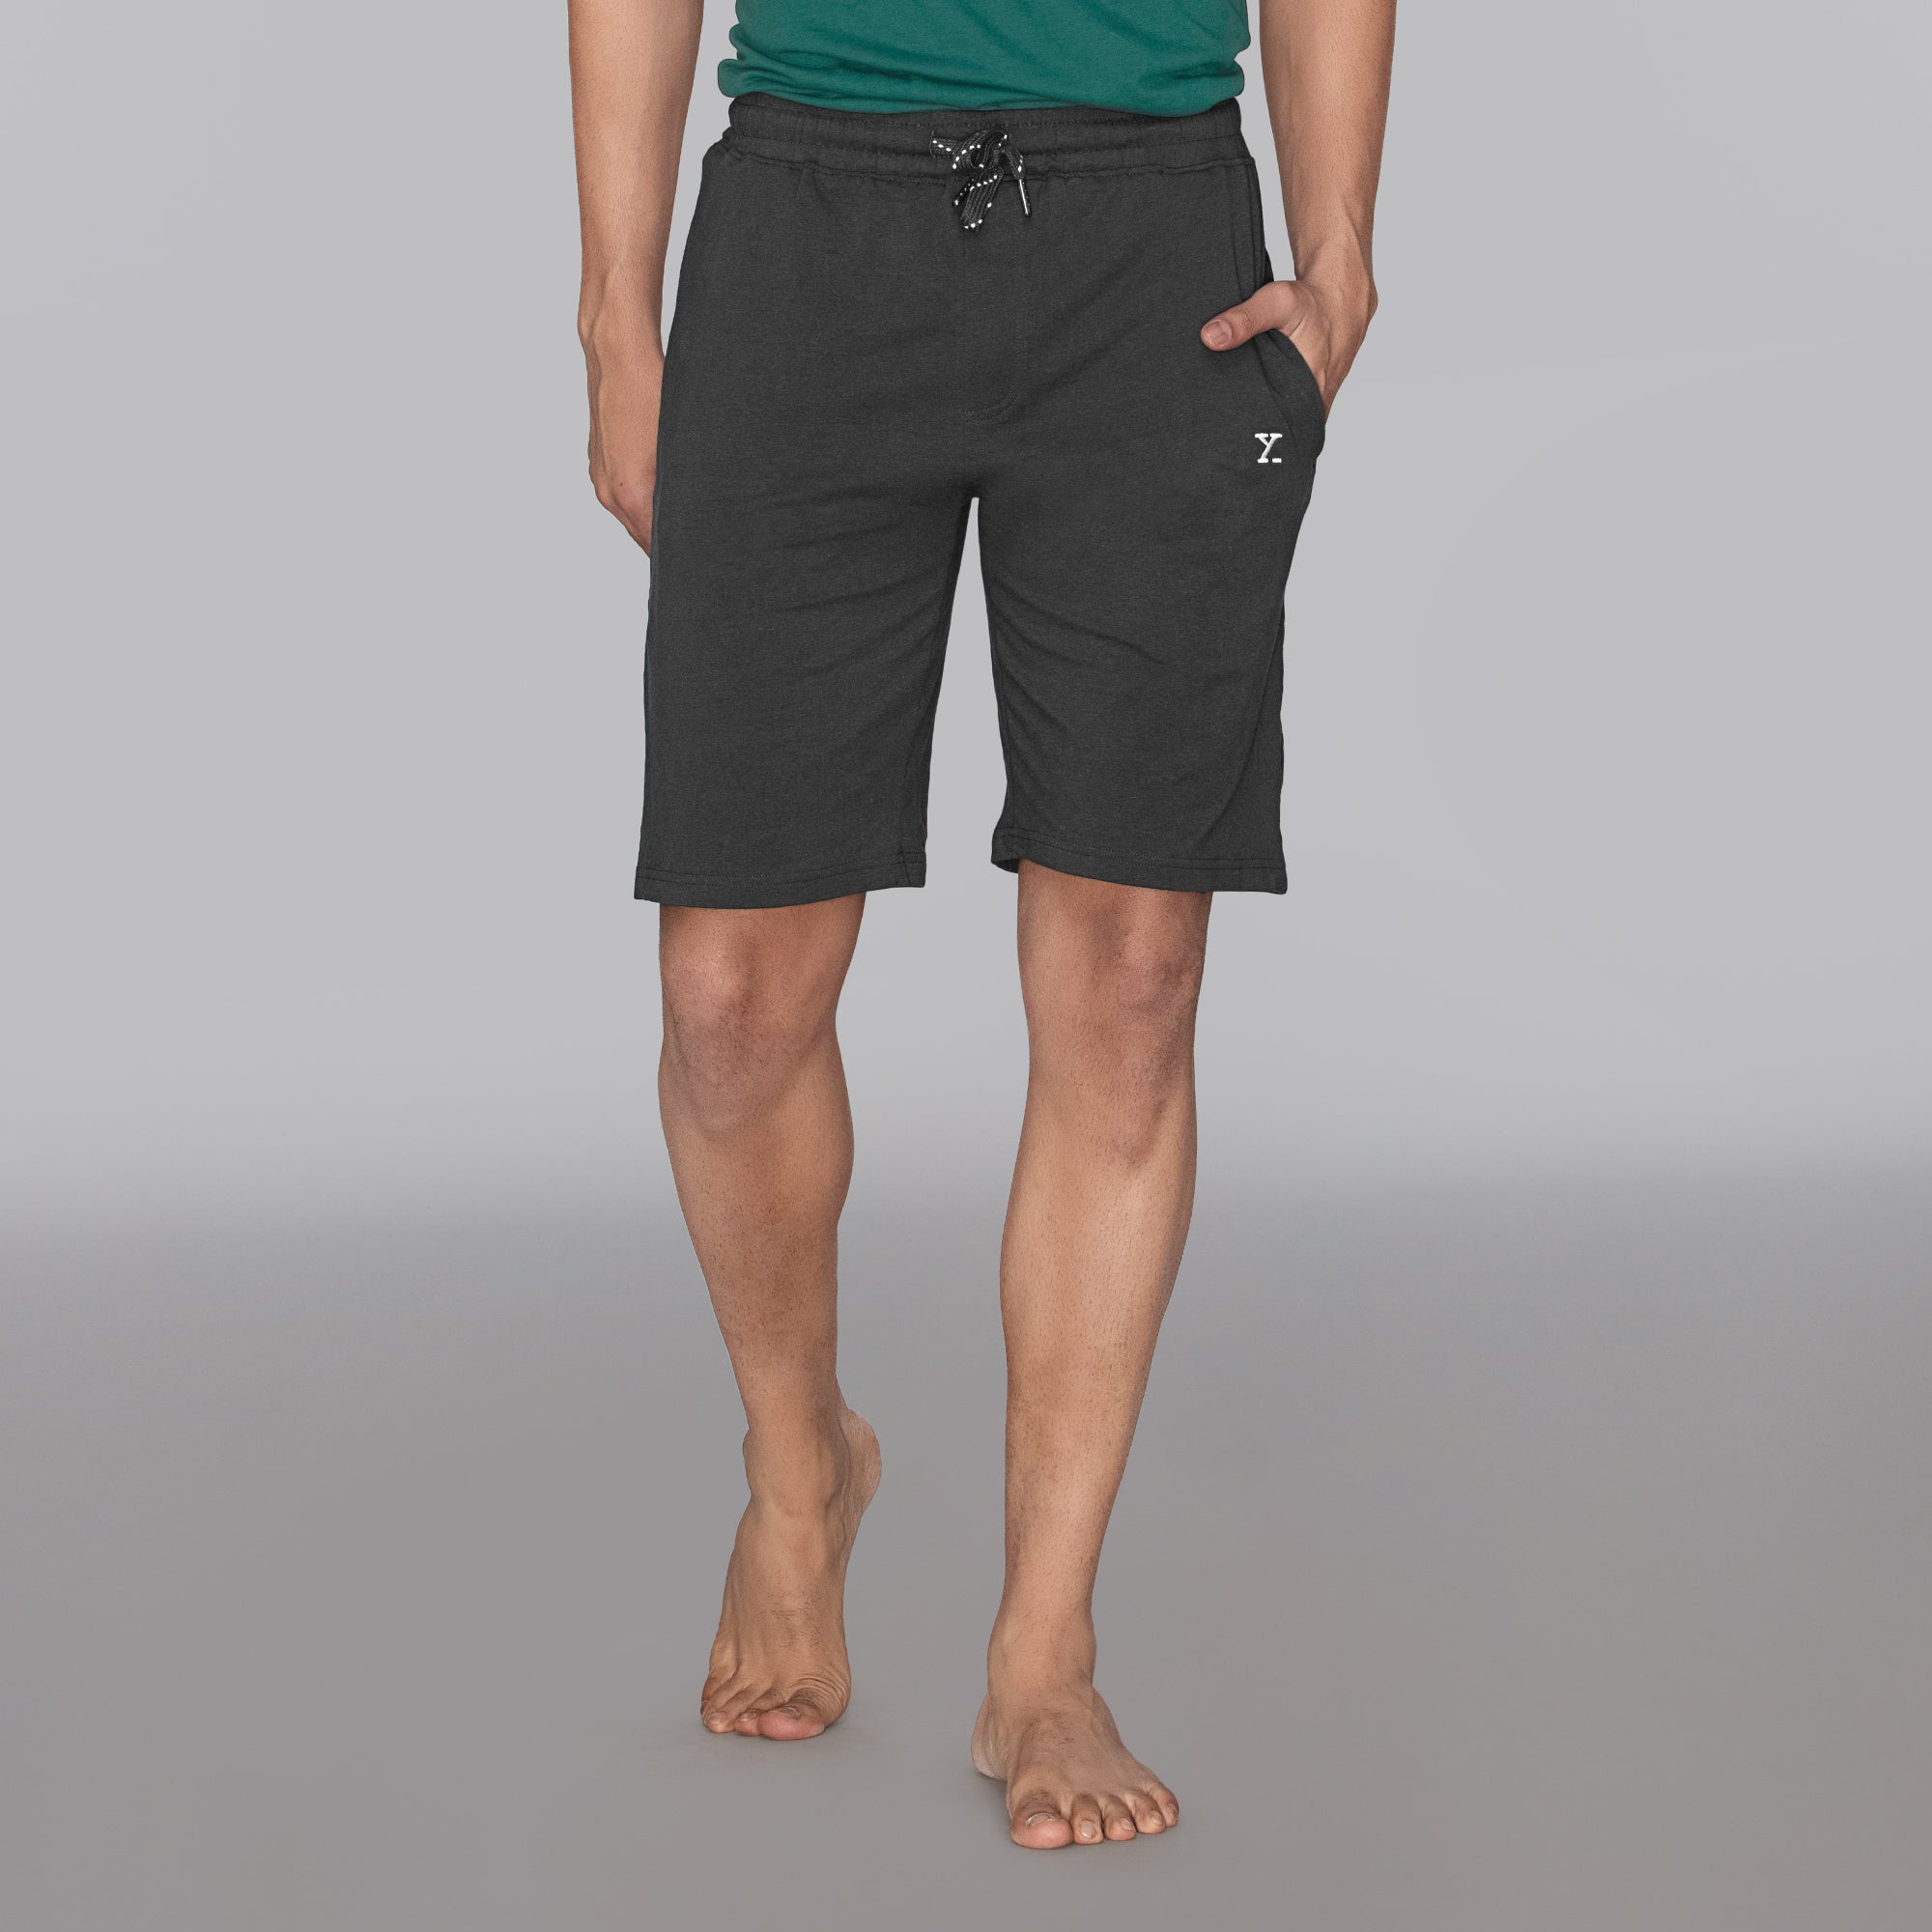 Ace Modal-Cotton Shorts For Men Graphite Grey - XYXX Mens Apparels